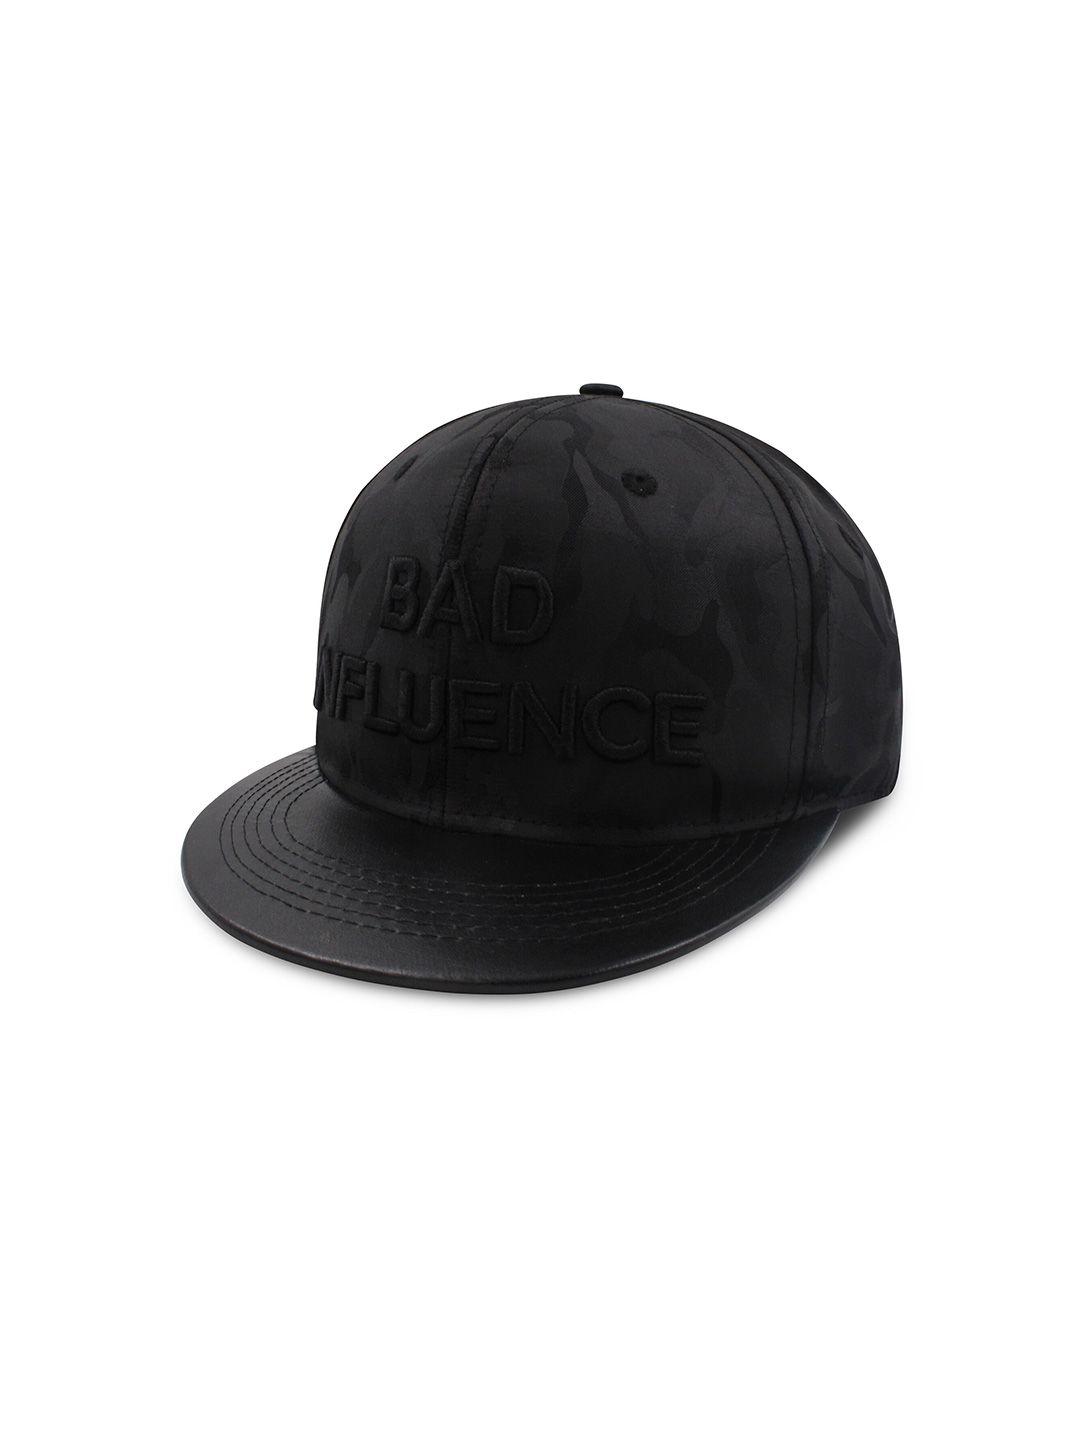 jenna men black & grey embroidered baseball cap